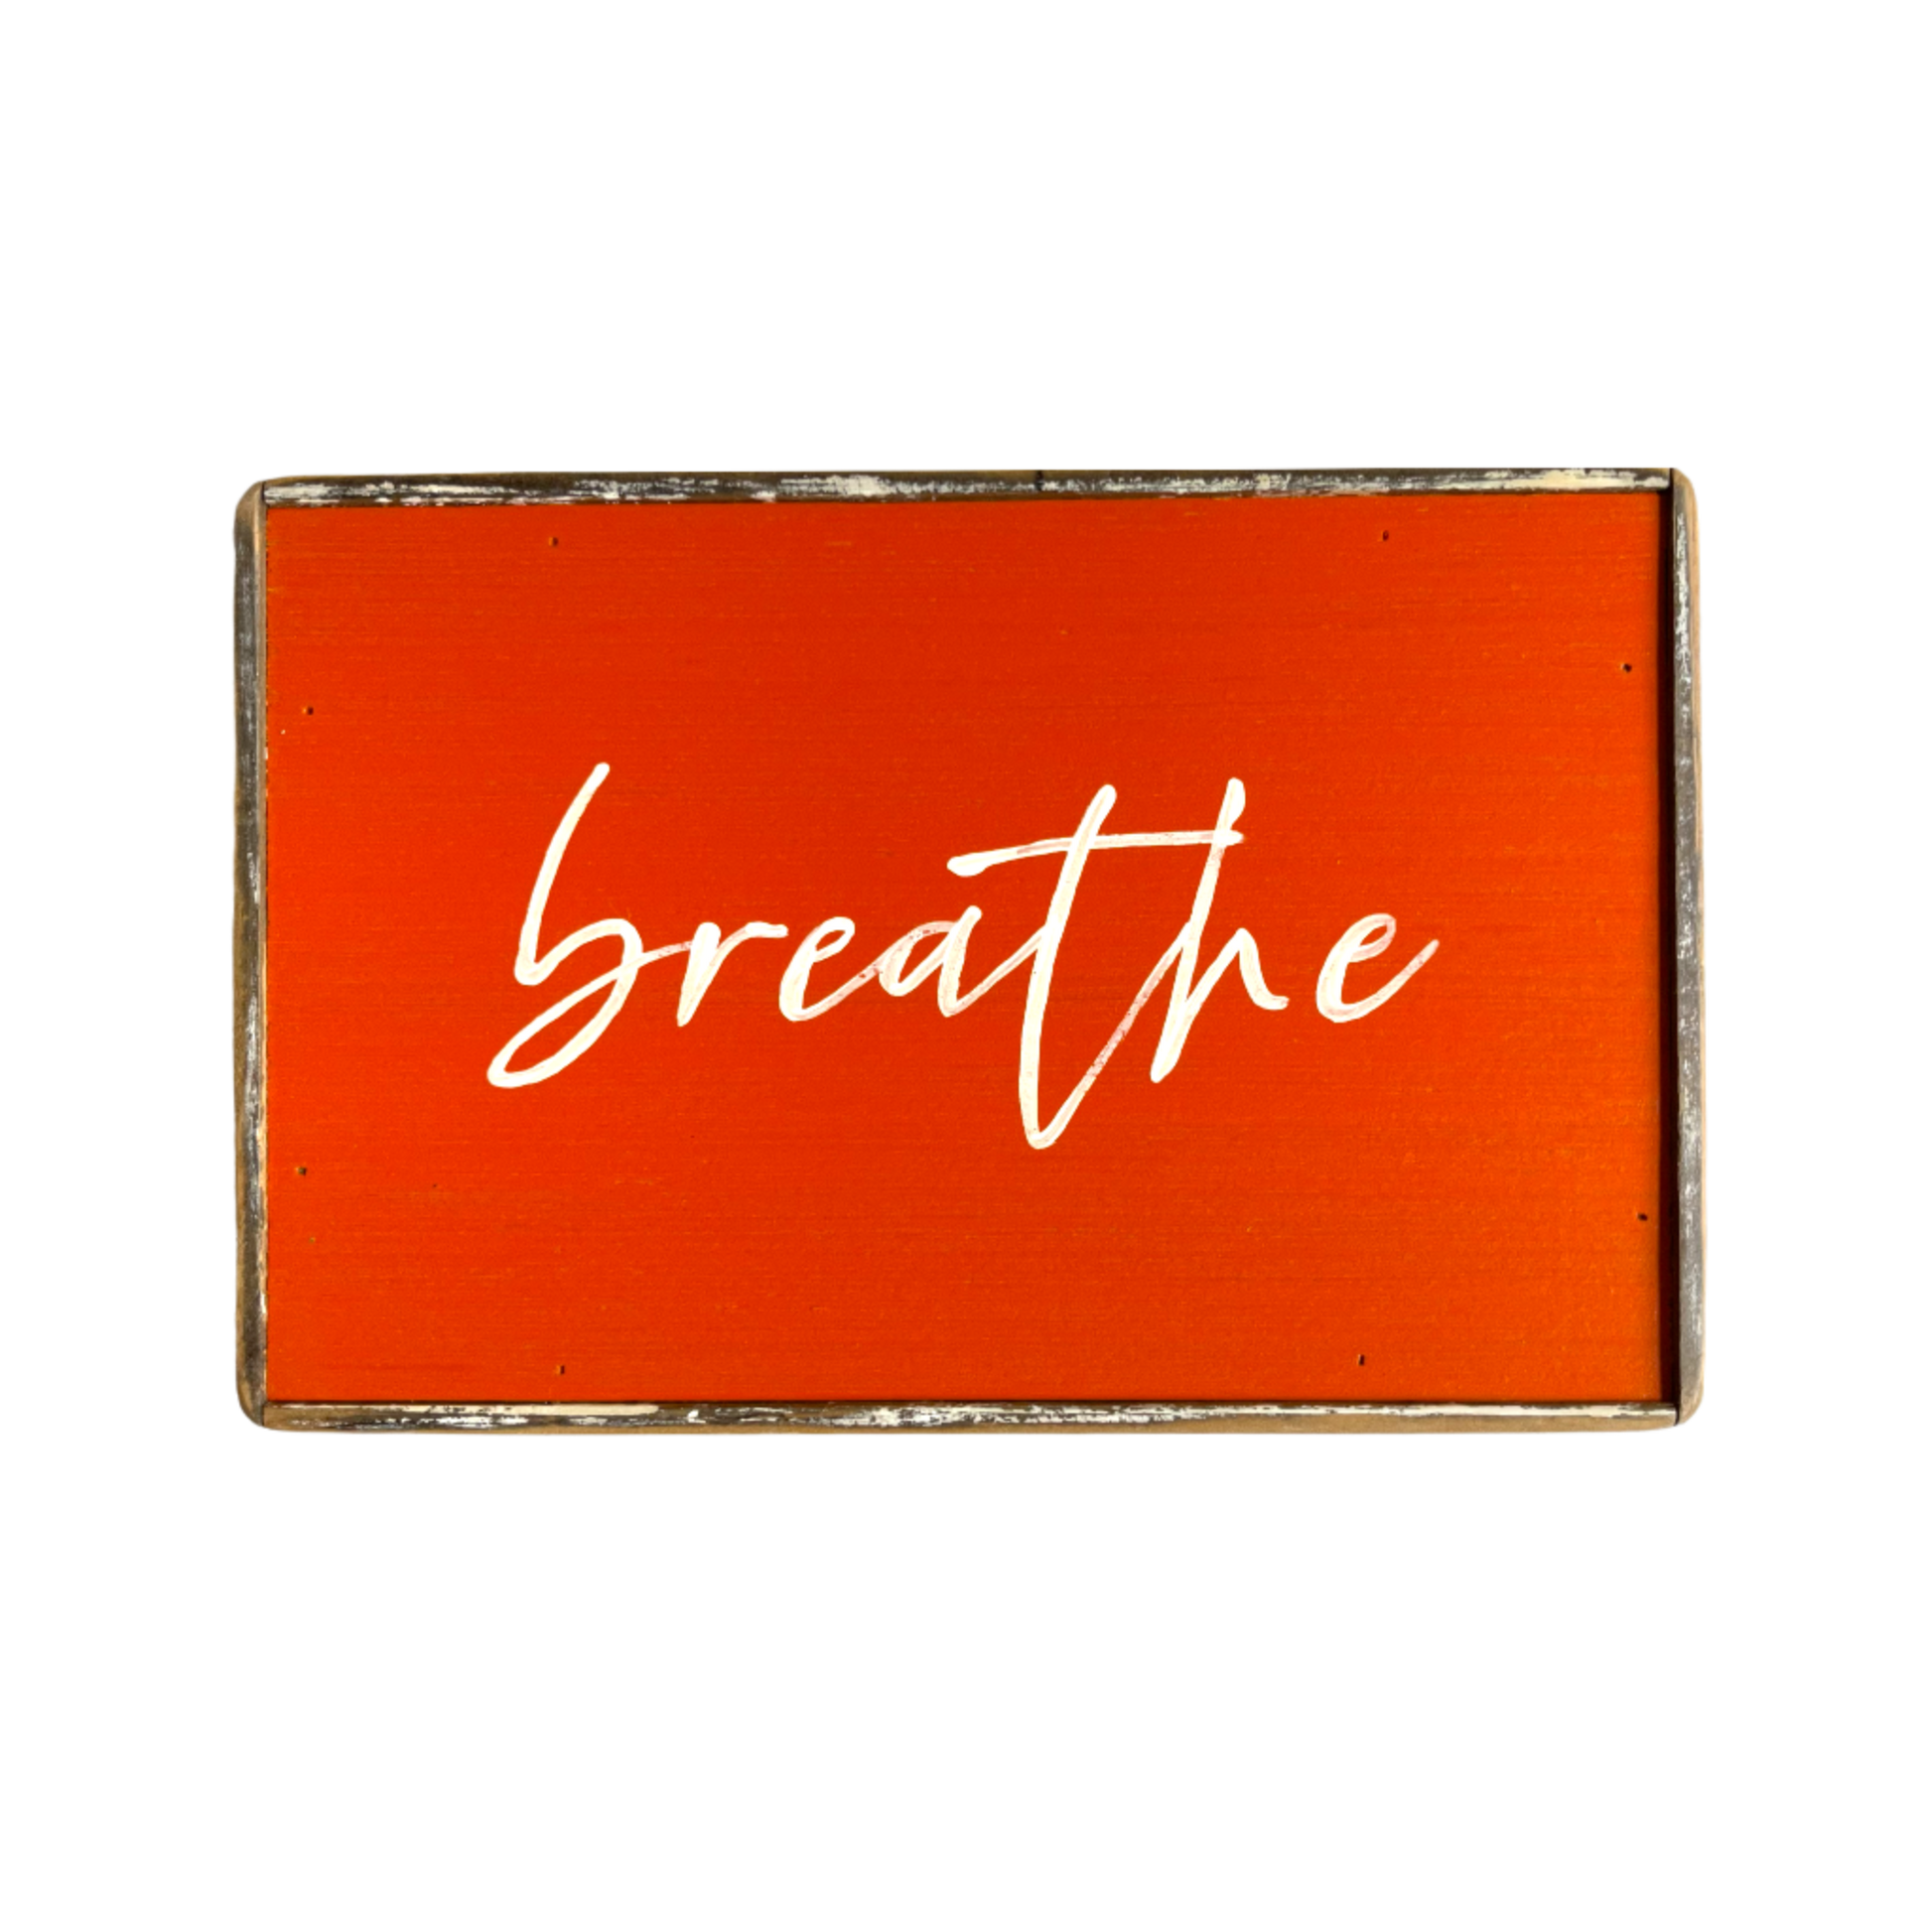 breathe orange painting